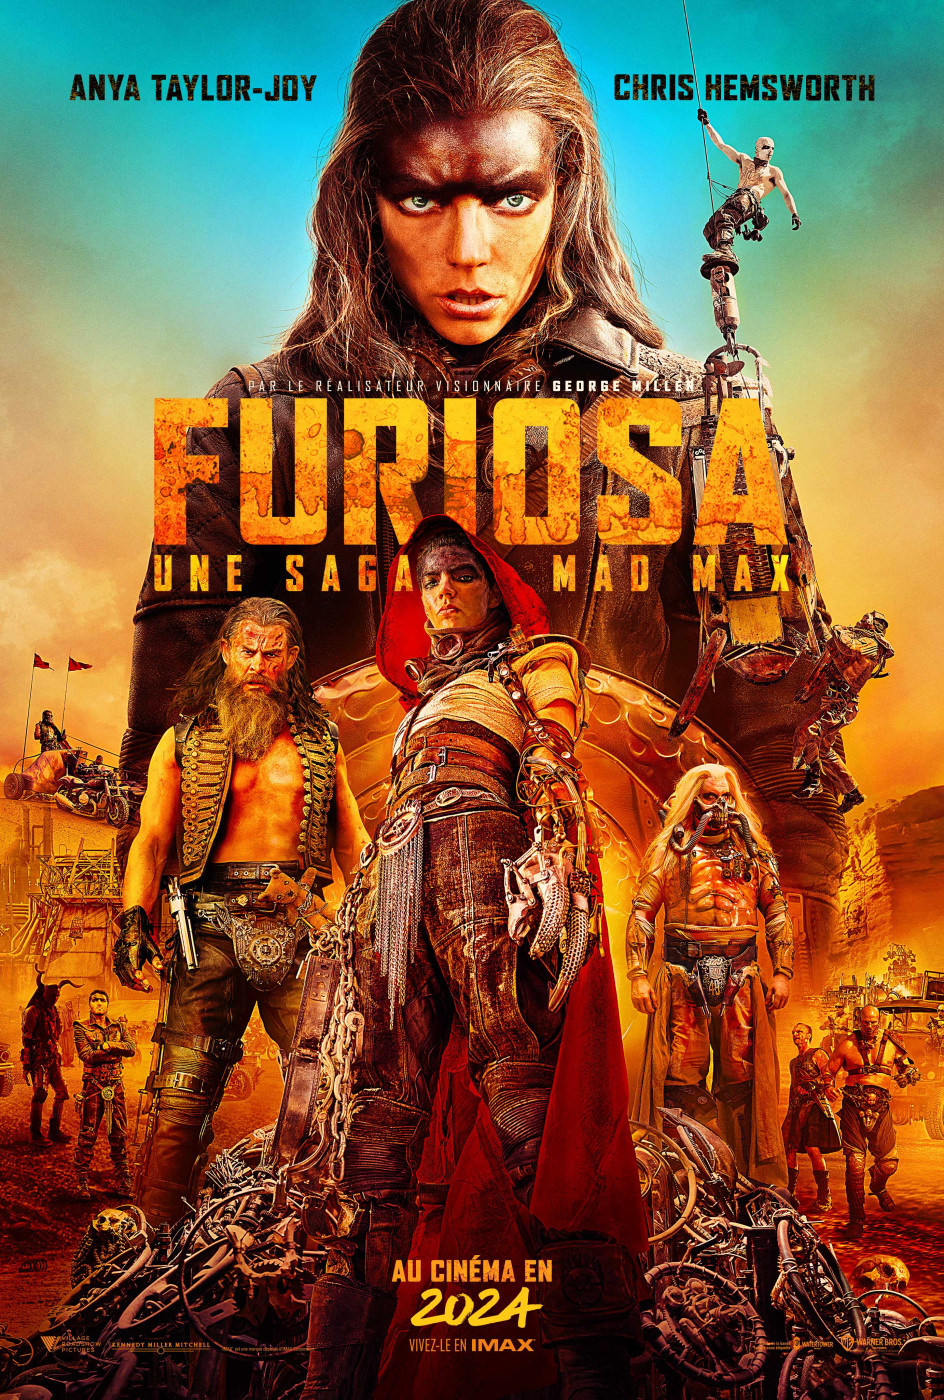 Furiosa A Mad Max Saga Artwork chf FR FRENCH FRIOSA VERT First Poster 2764x4096 INTL